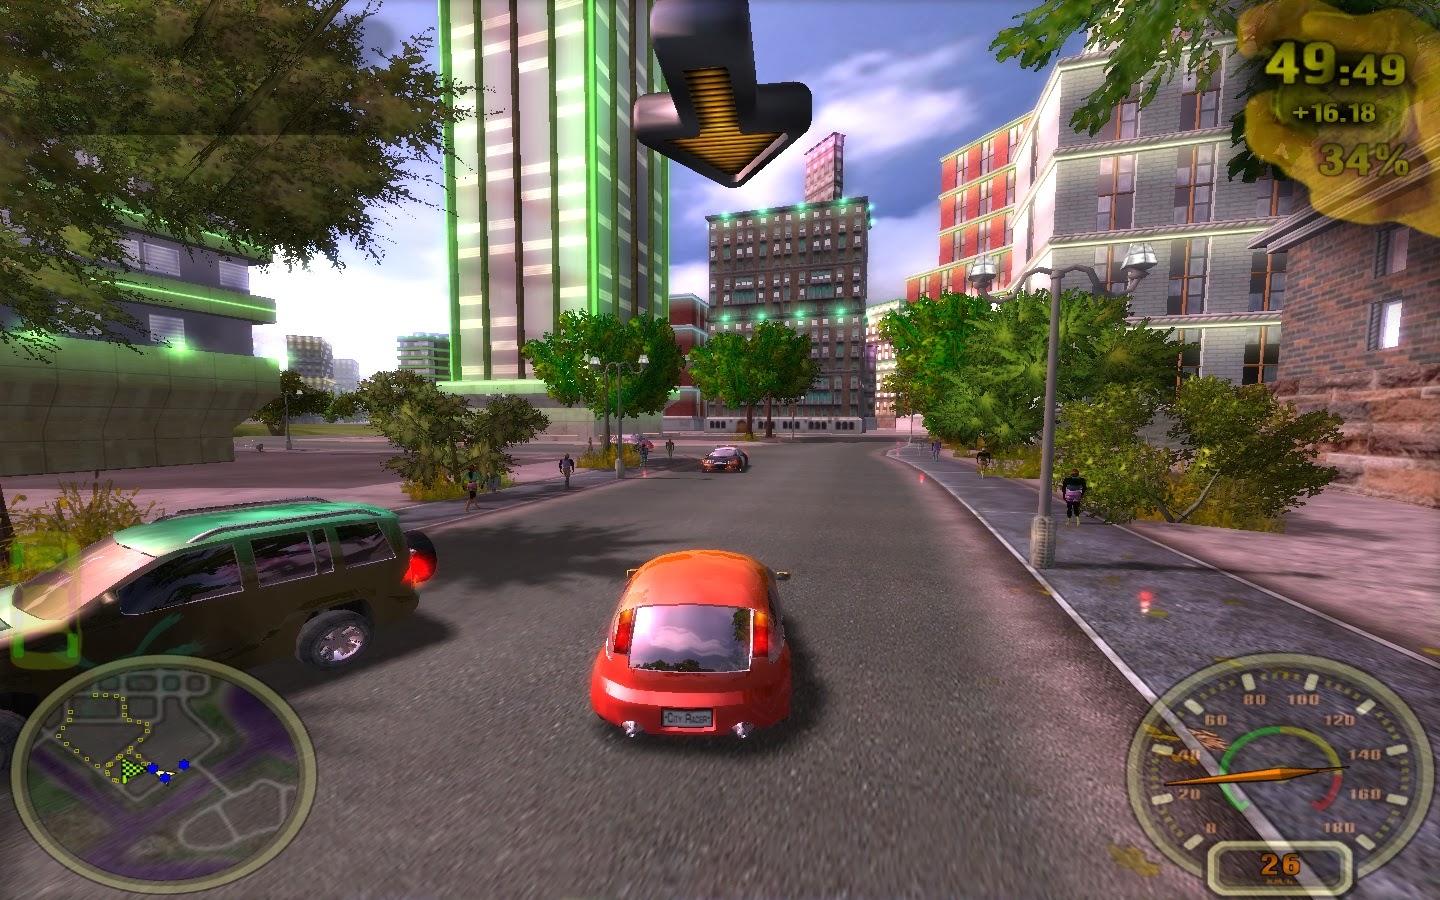 Download cars 2 game pc free full version